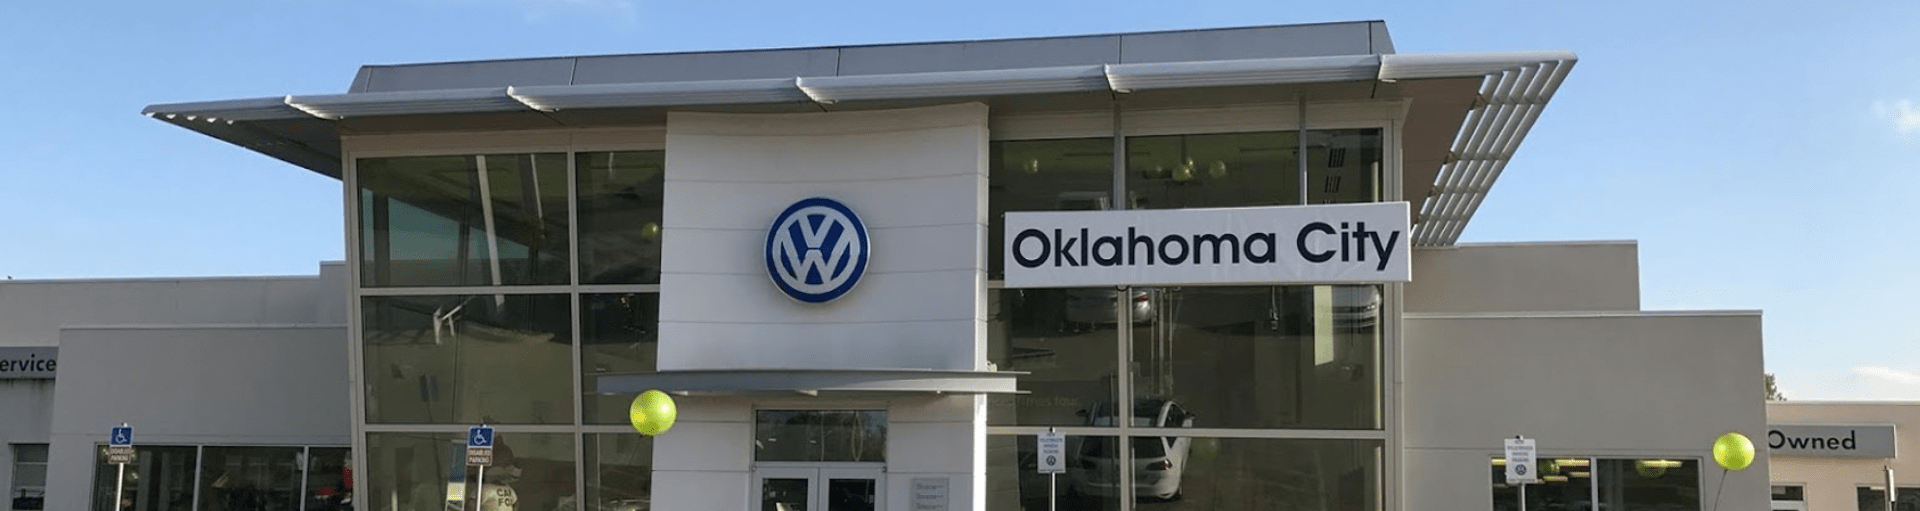 Oklahoma City Volkswagen Fluid Services